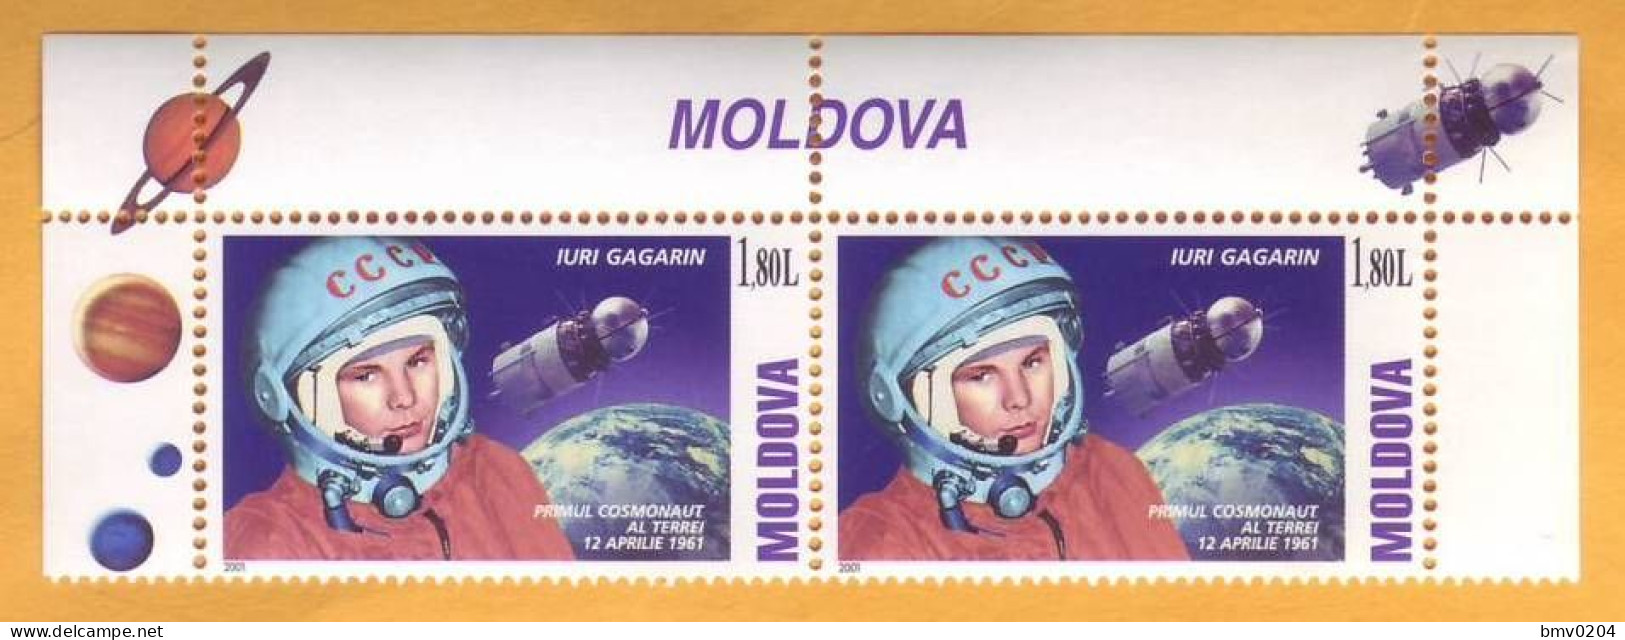 2001 Moldova Moldavie Moldau 40 Gagarin Russia USSR First Cosmonaut  Space, Rocket, Satellite, Astronaut 2v Mint - Russie & URSS